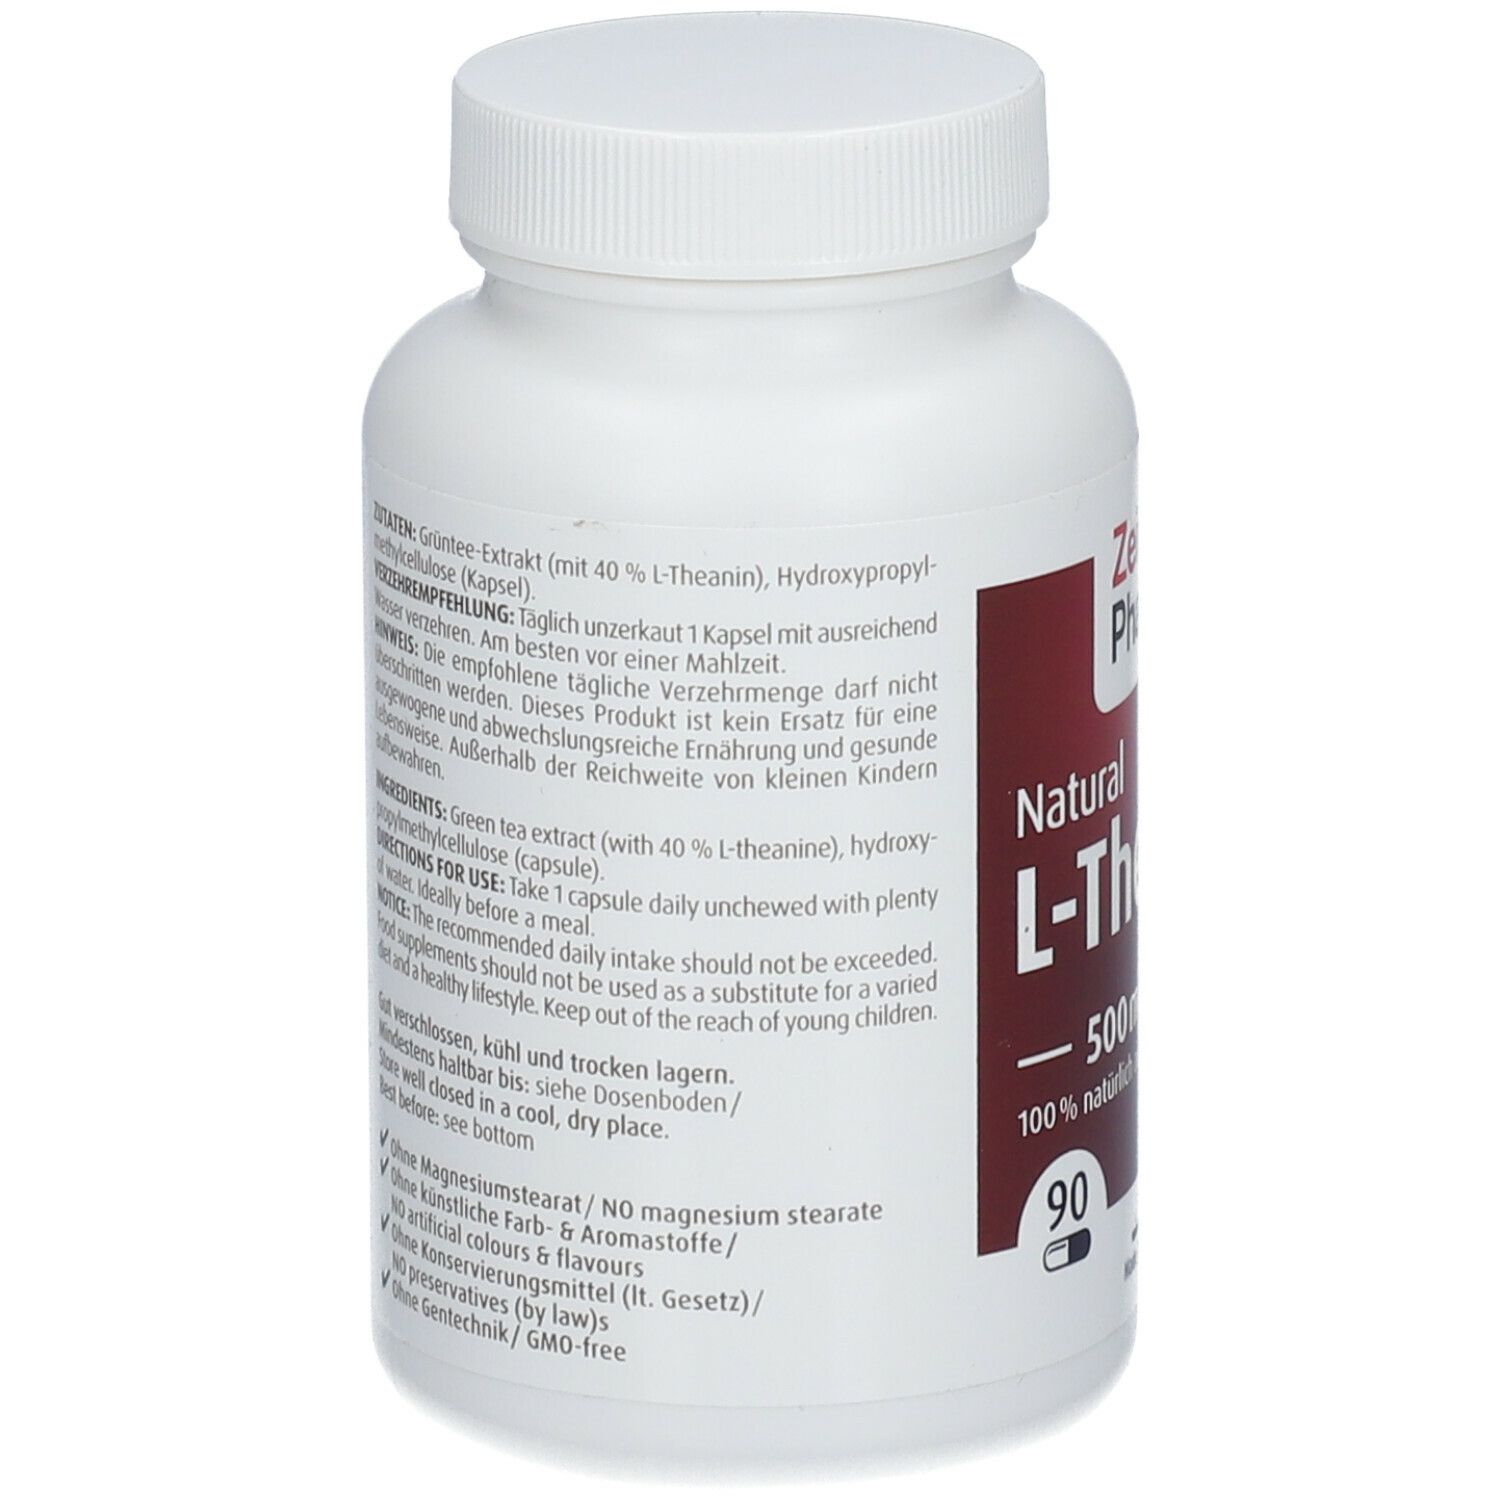 ZeinPharma® L Theanin Kapseln Natural Forte 500 mg